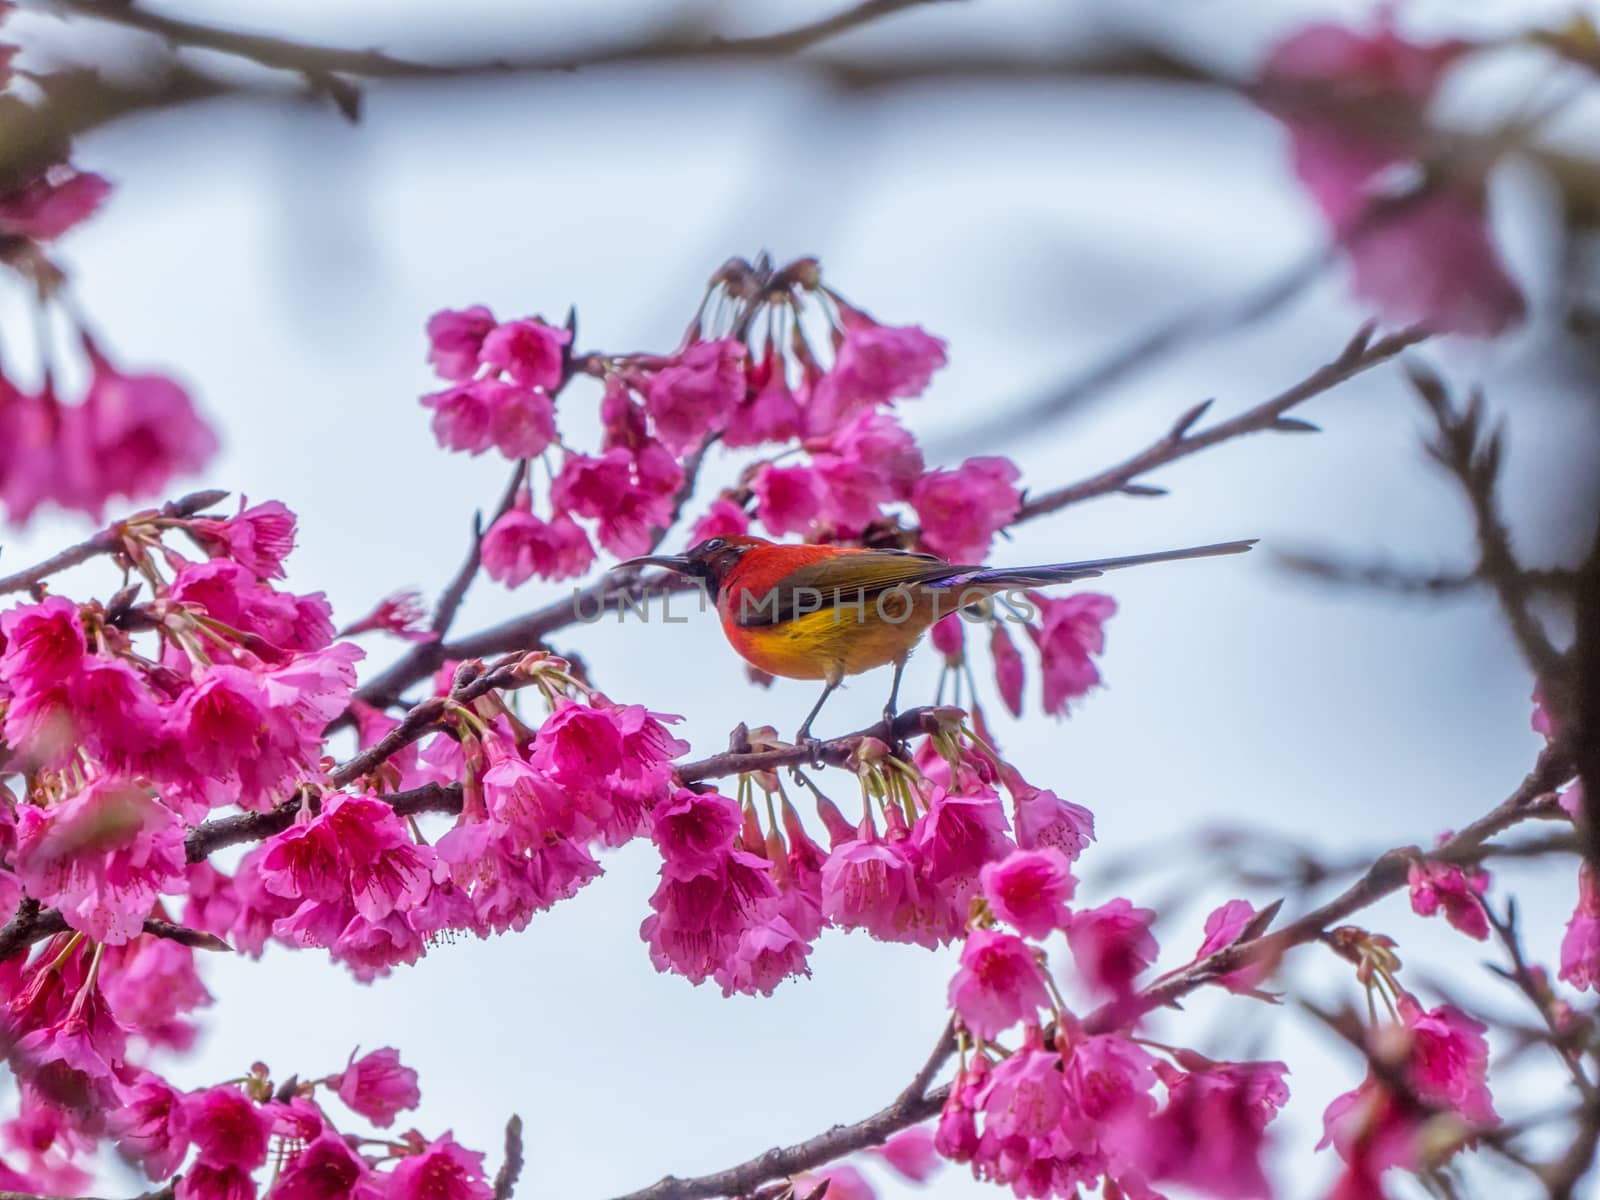 Mrs Gould's sunbird (Aethopyga gouldiae) on the Sakura pink flower in Chiang Mai, Thailand.